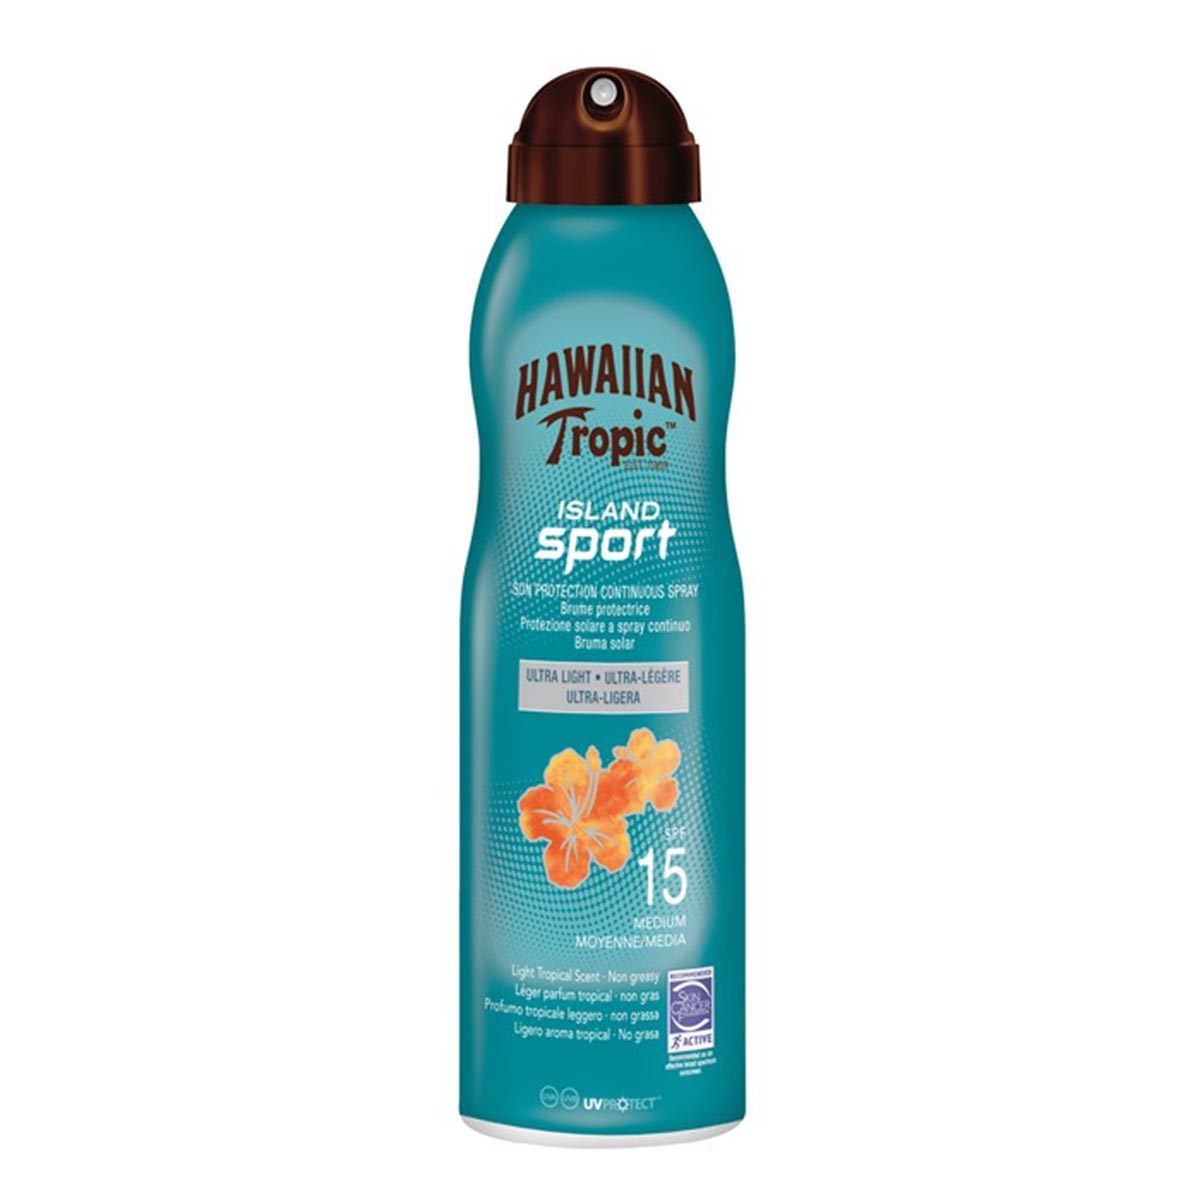 Image of Hawaiian Tropic Island Sport Sun Protection Continuous Spray Ultra Light Spf15 220ml